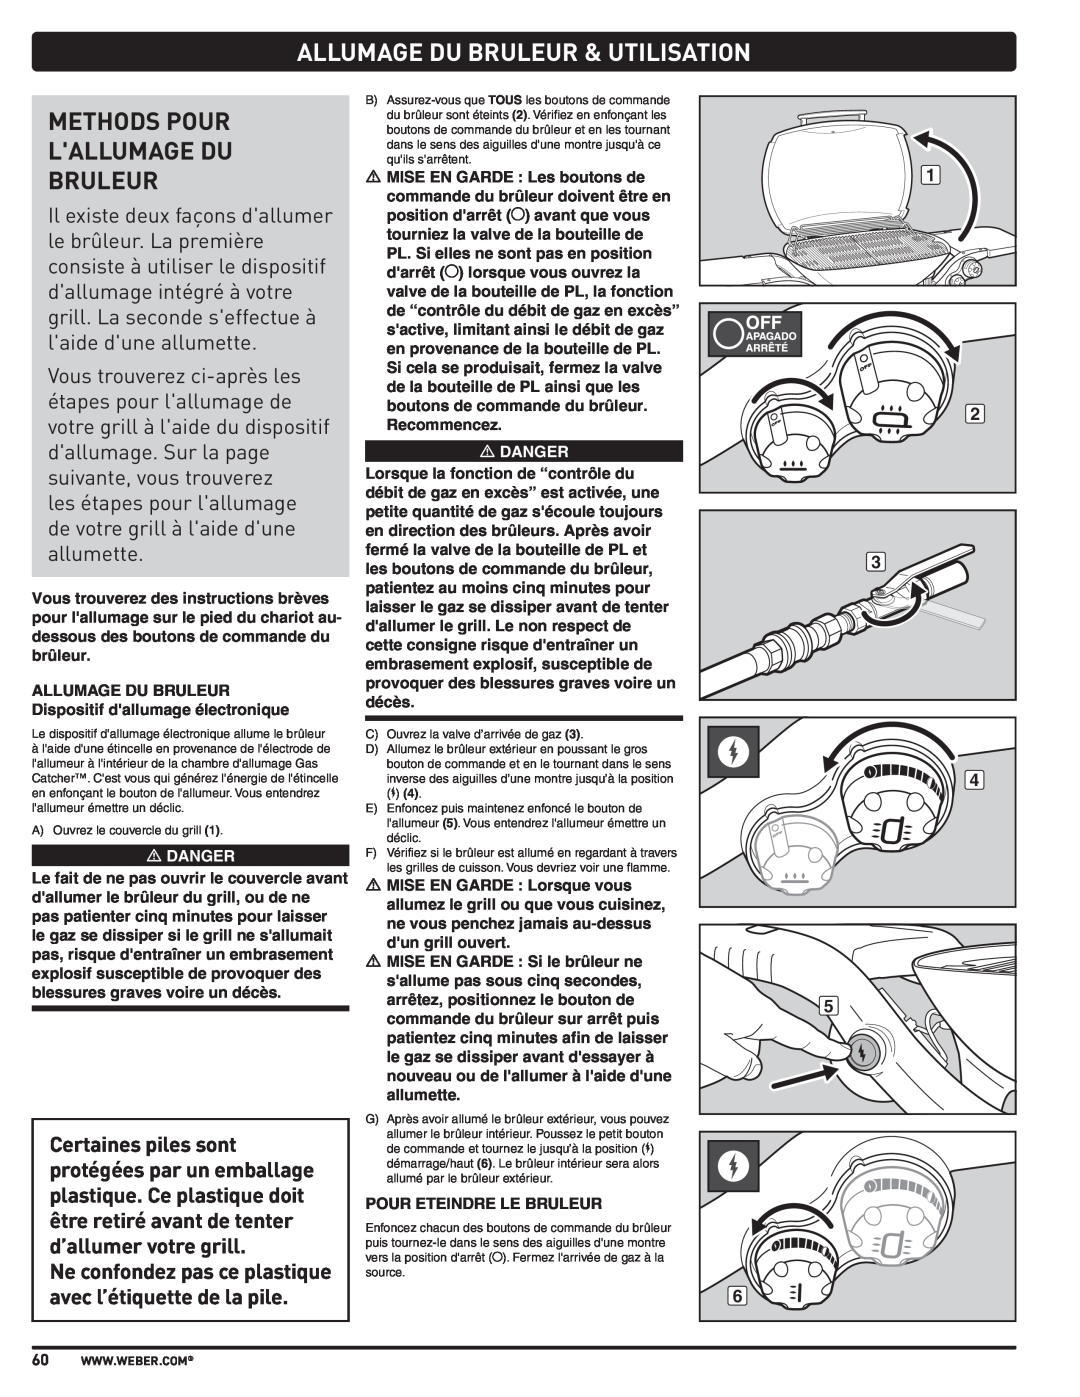 Weber 57515 manual Allumage Du Bruleur & Utilisation, Methods Pour Lallumage Du Bruleur 